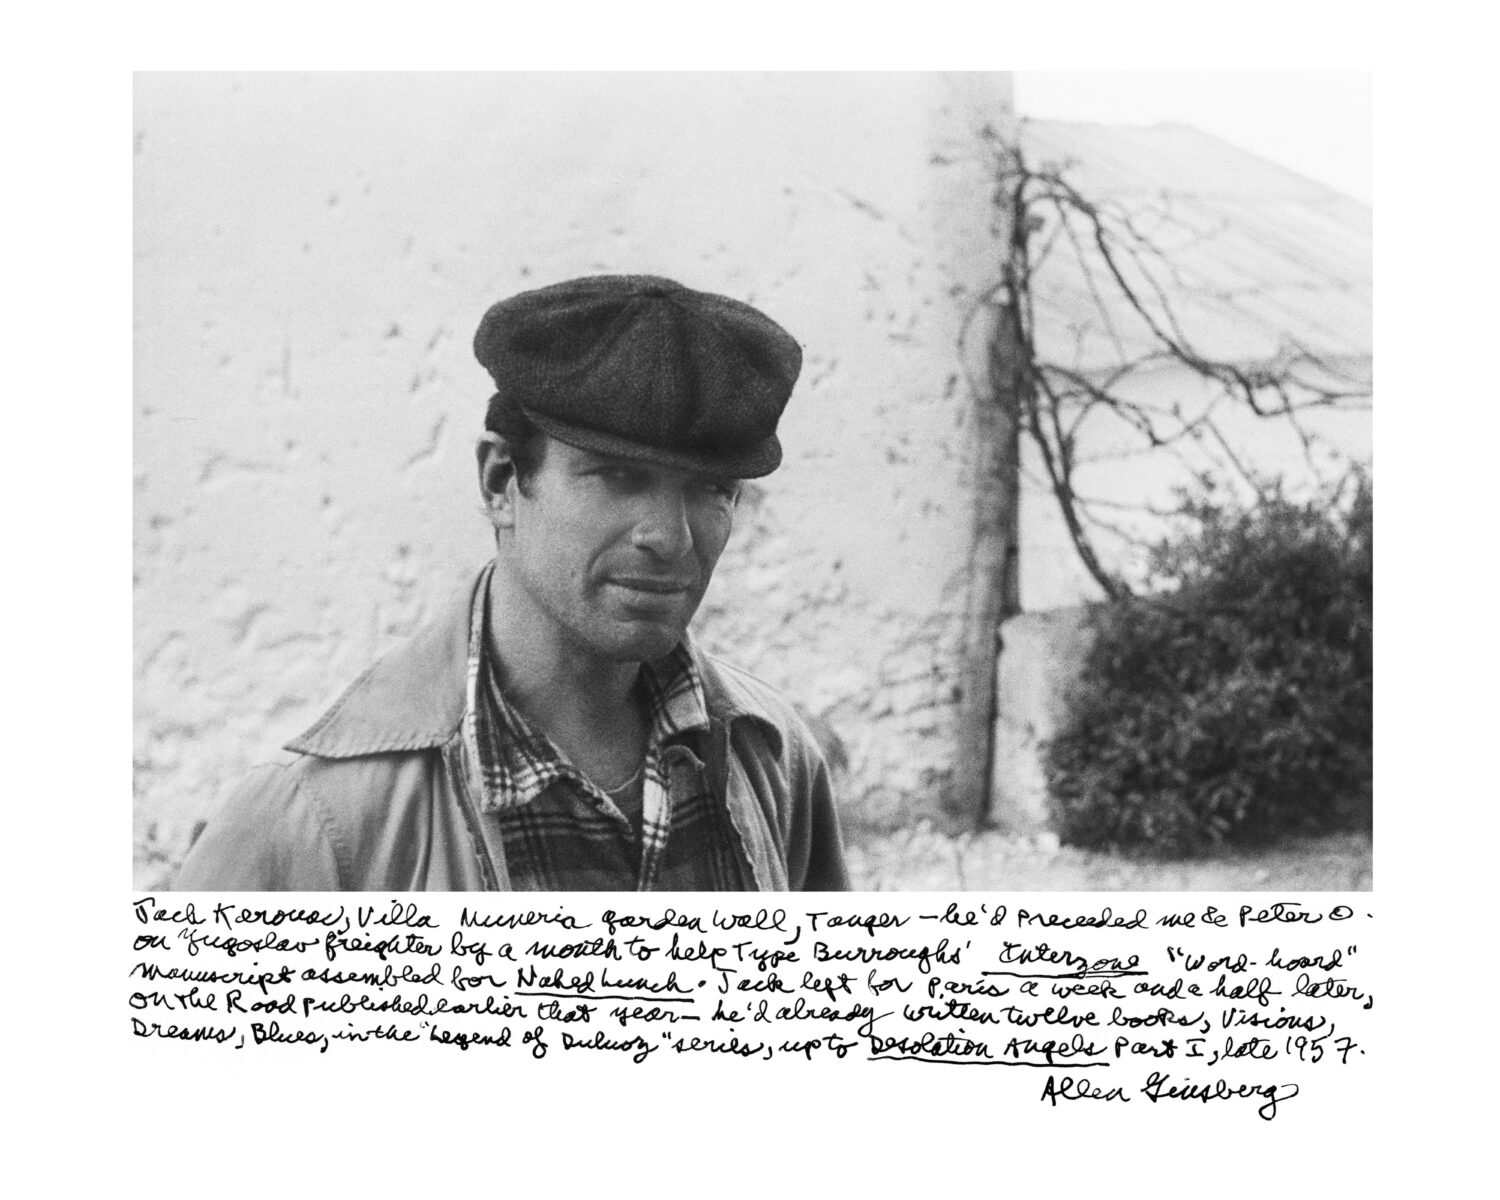 Jack Kerouac Villa Muniria Garden Tangier 1957 REF 0049 681 ©Allen Ginsberg courtesy of FaheyKlein Gallery Los Angeles